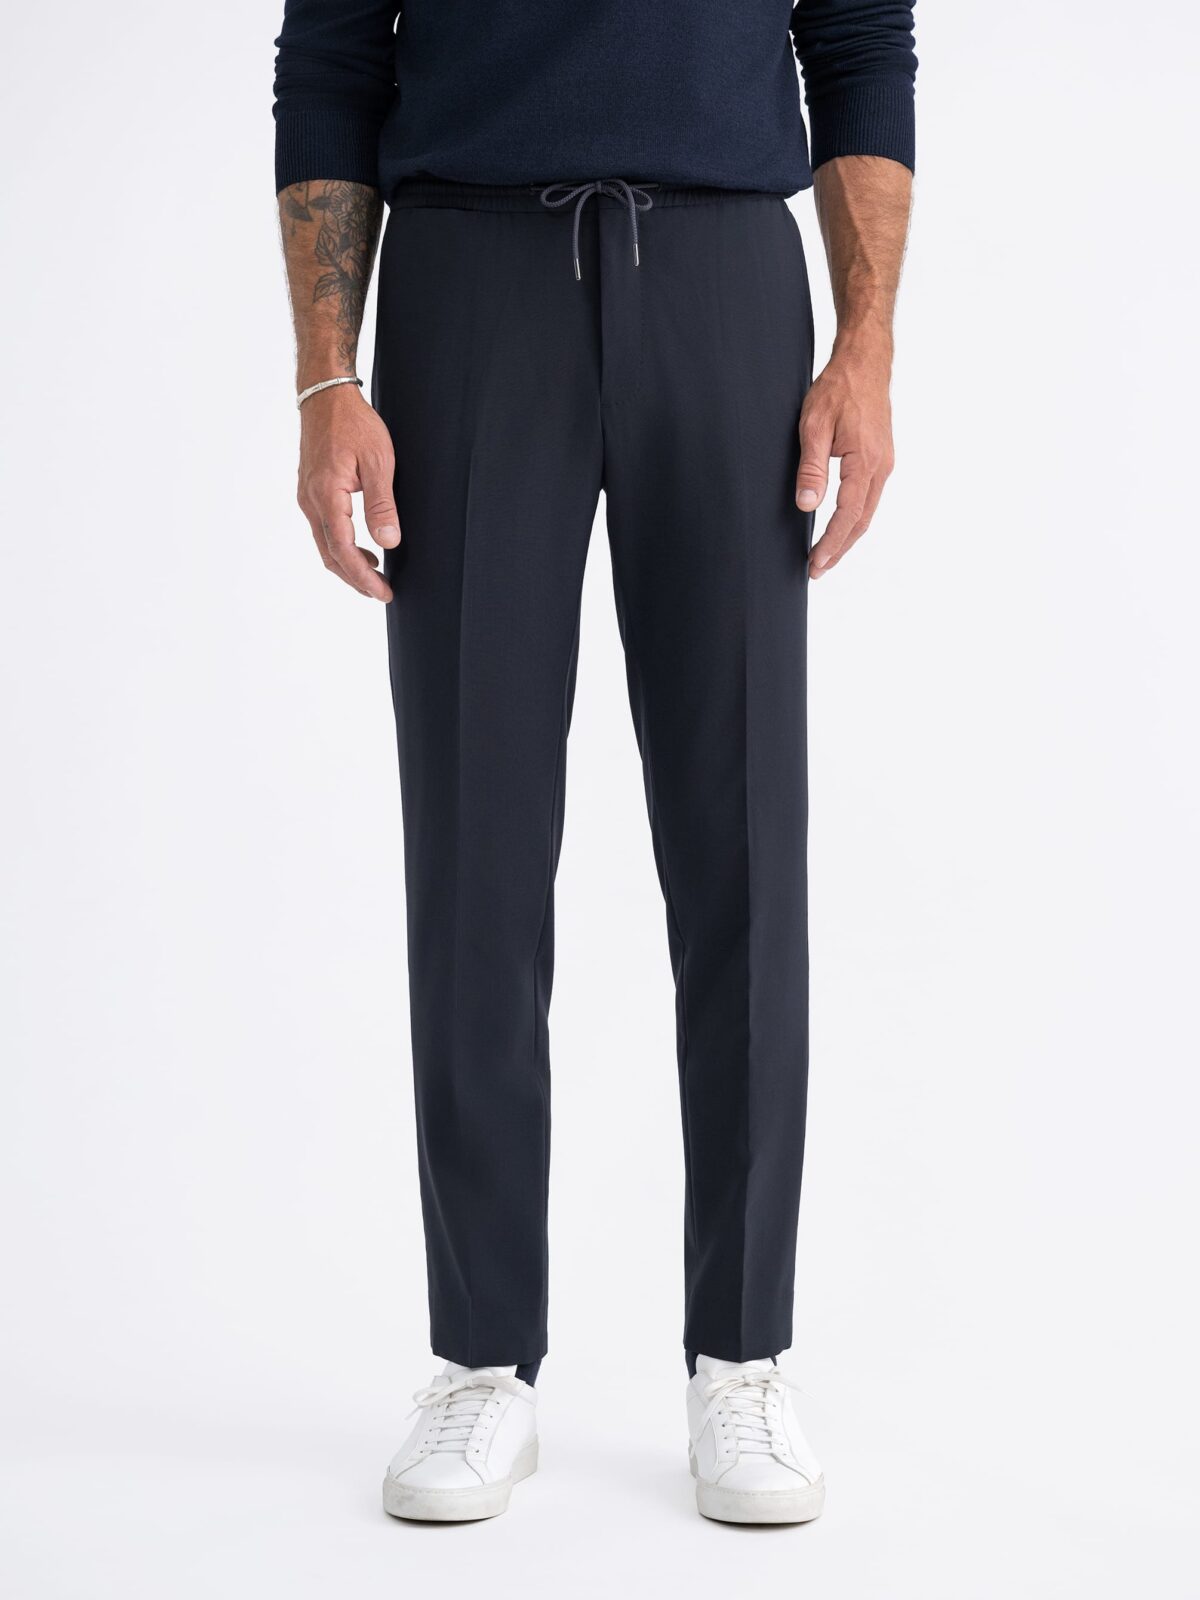 Black Drawstring Trousers – Oz1 Clothing